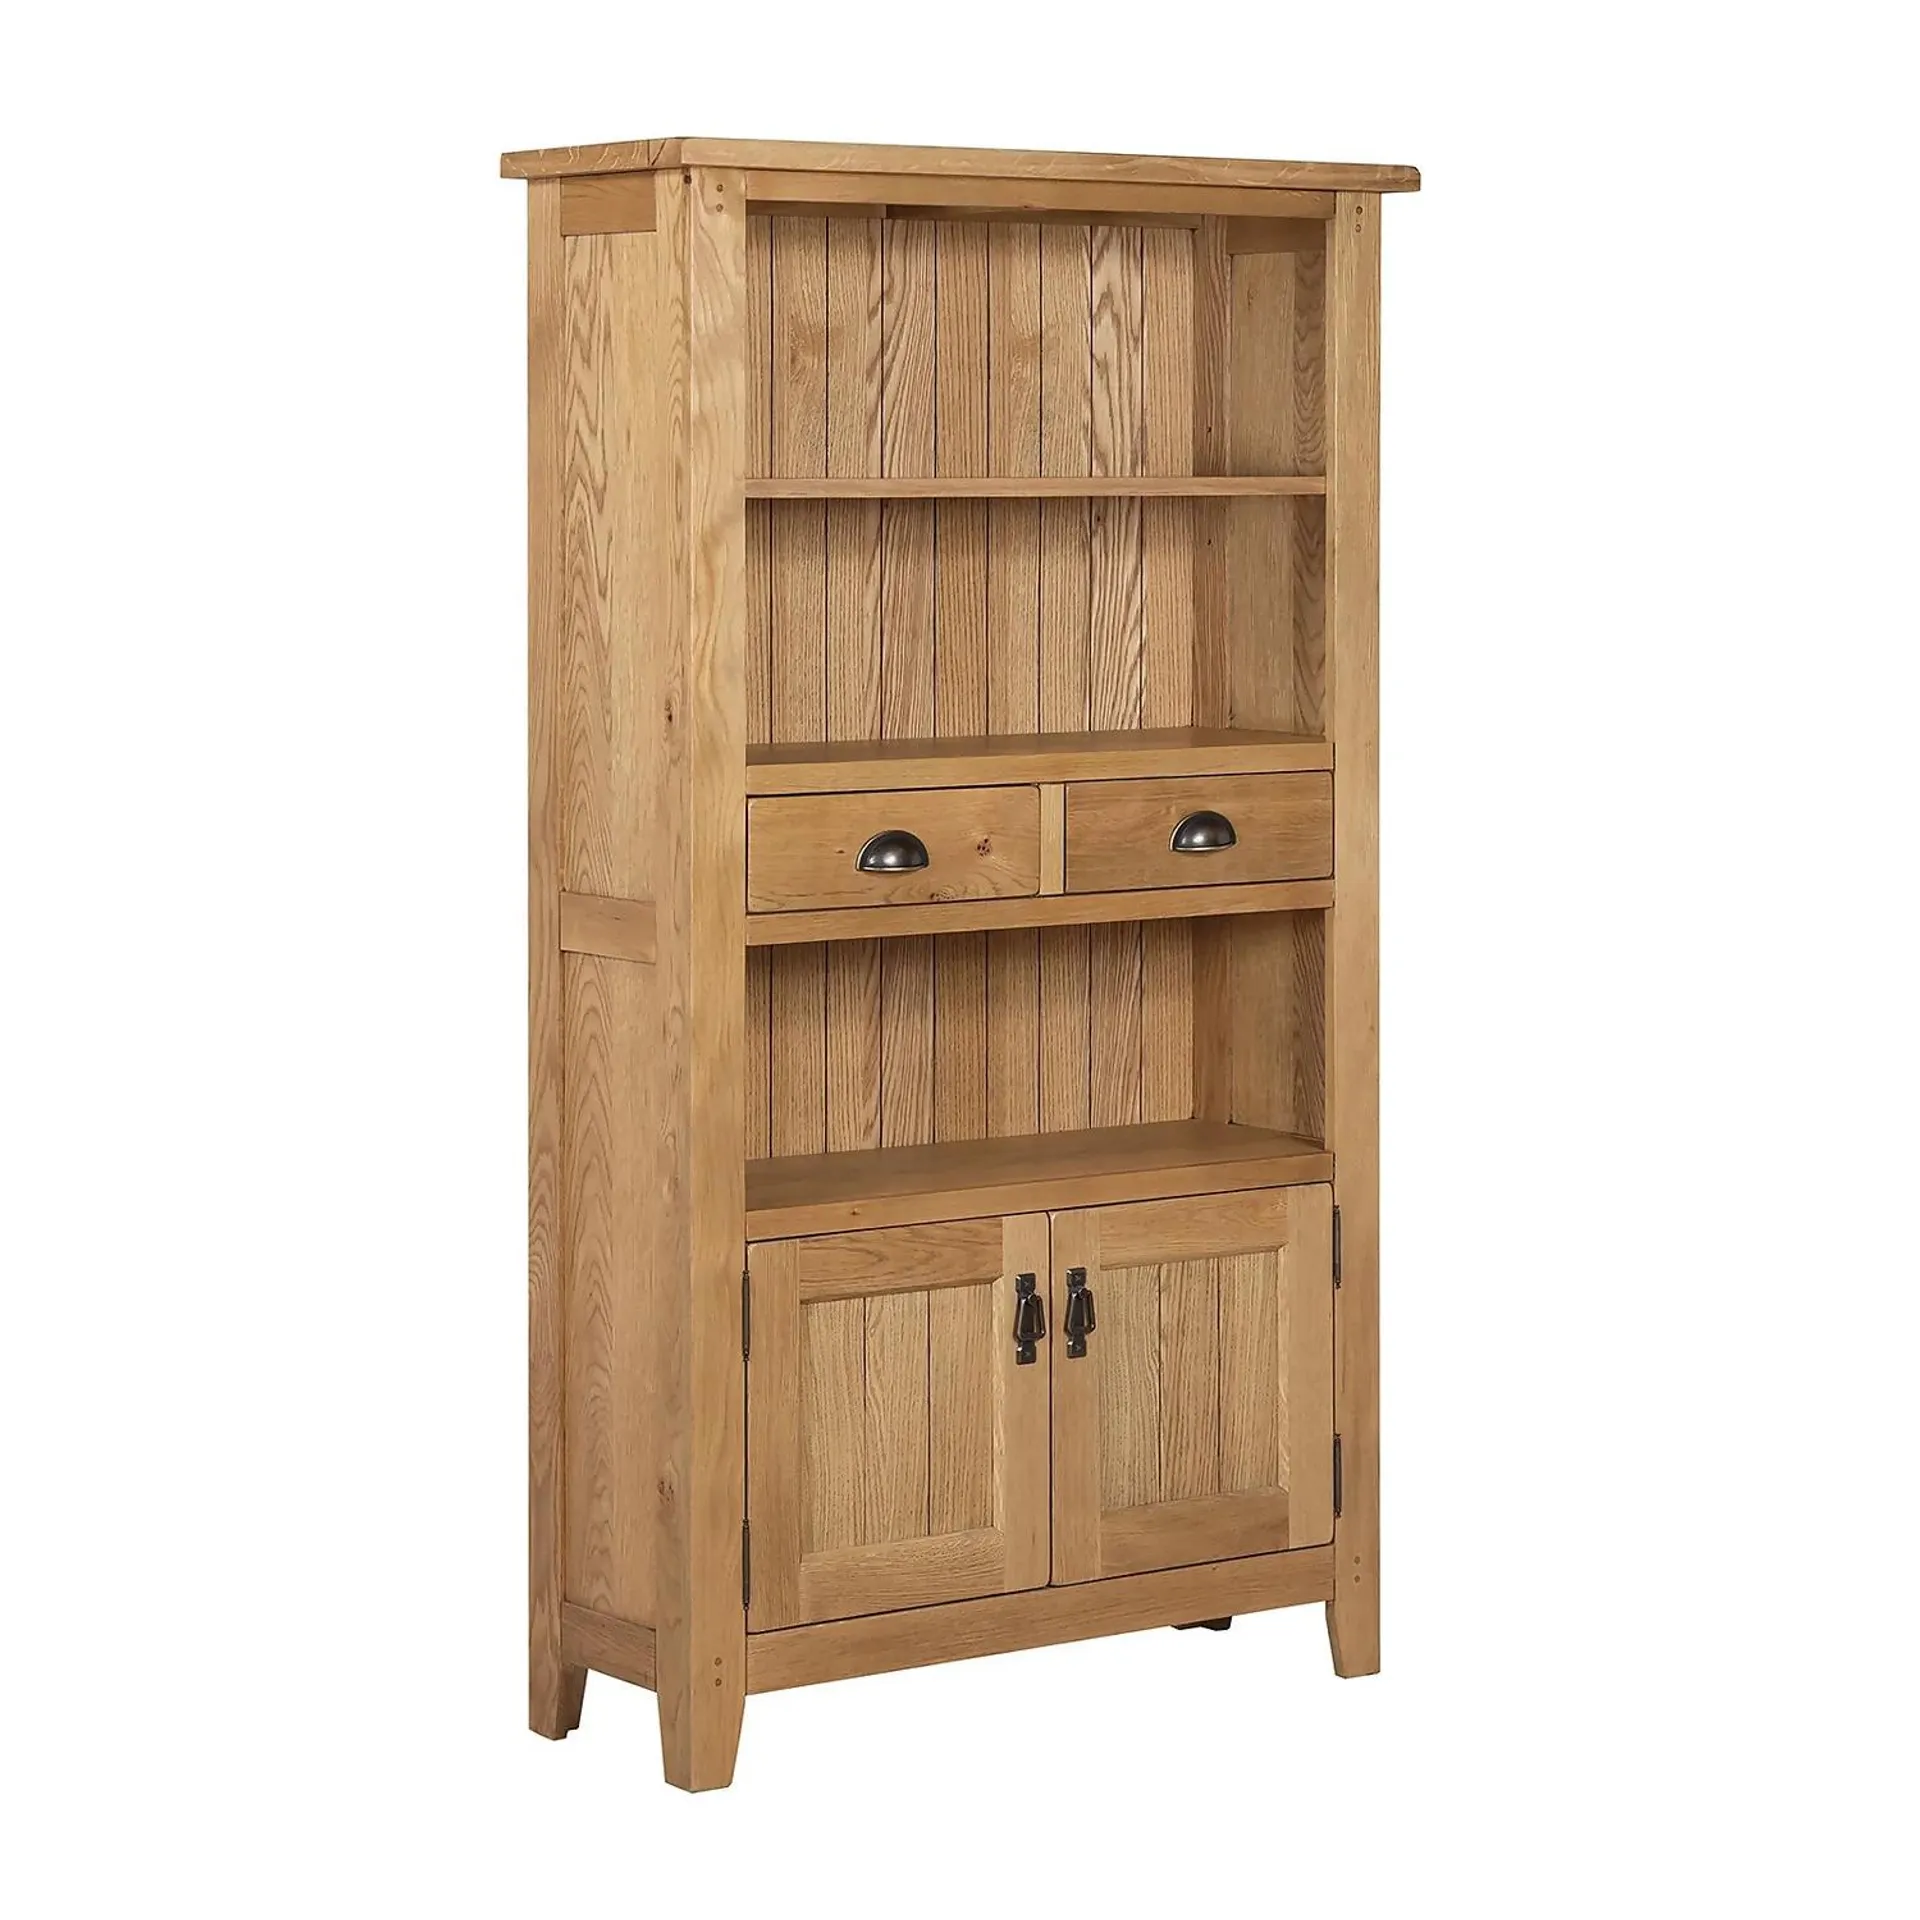 Hocombe Display Bookcase - Oak